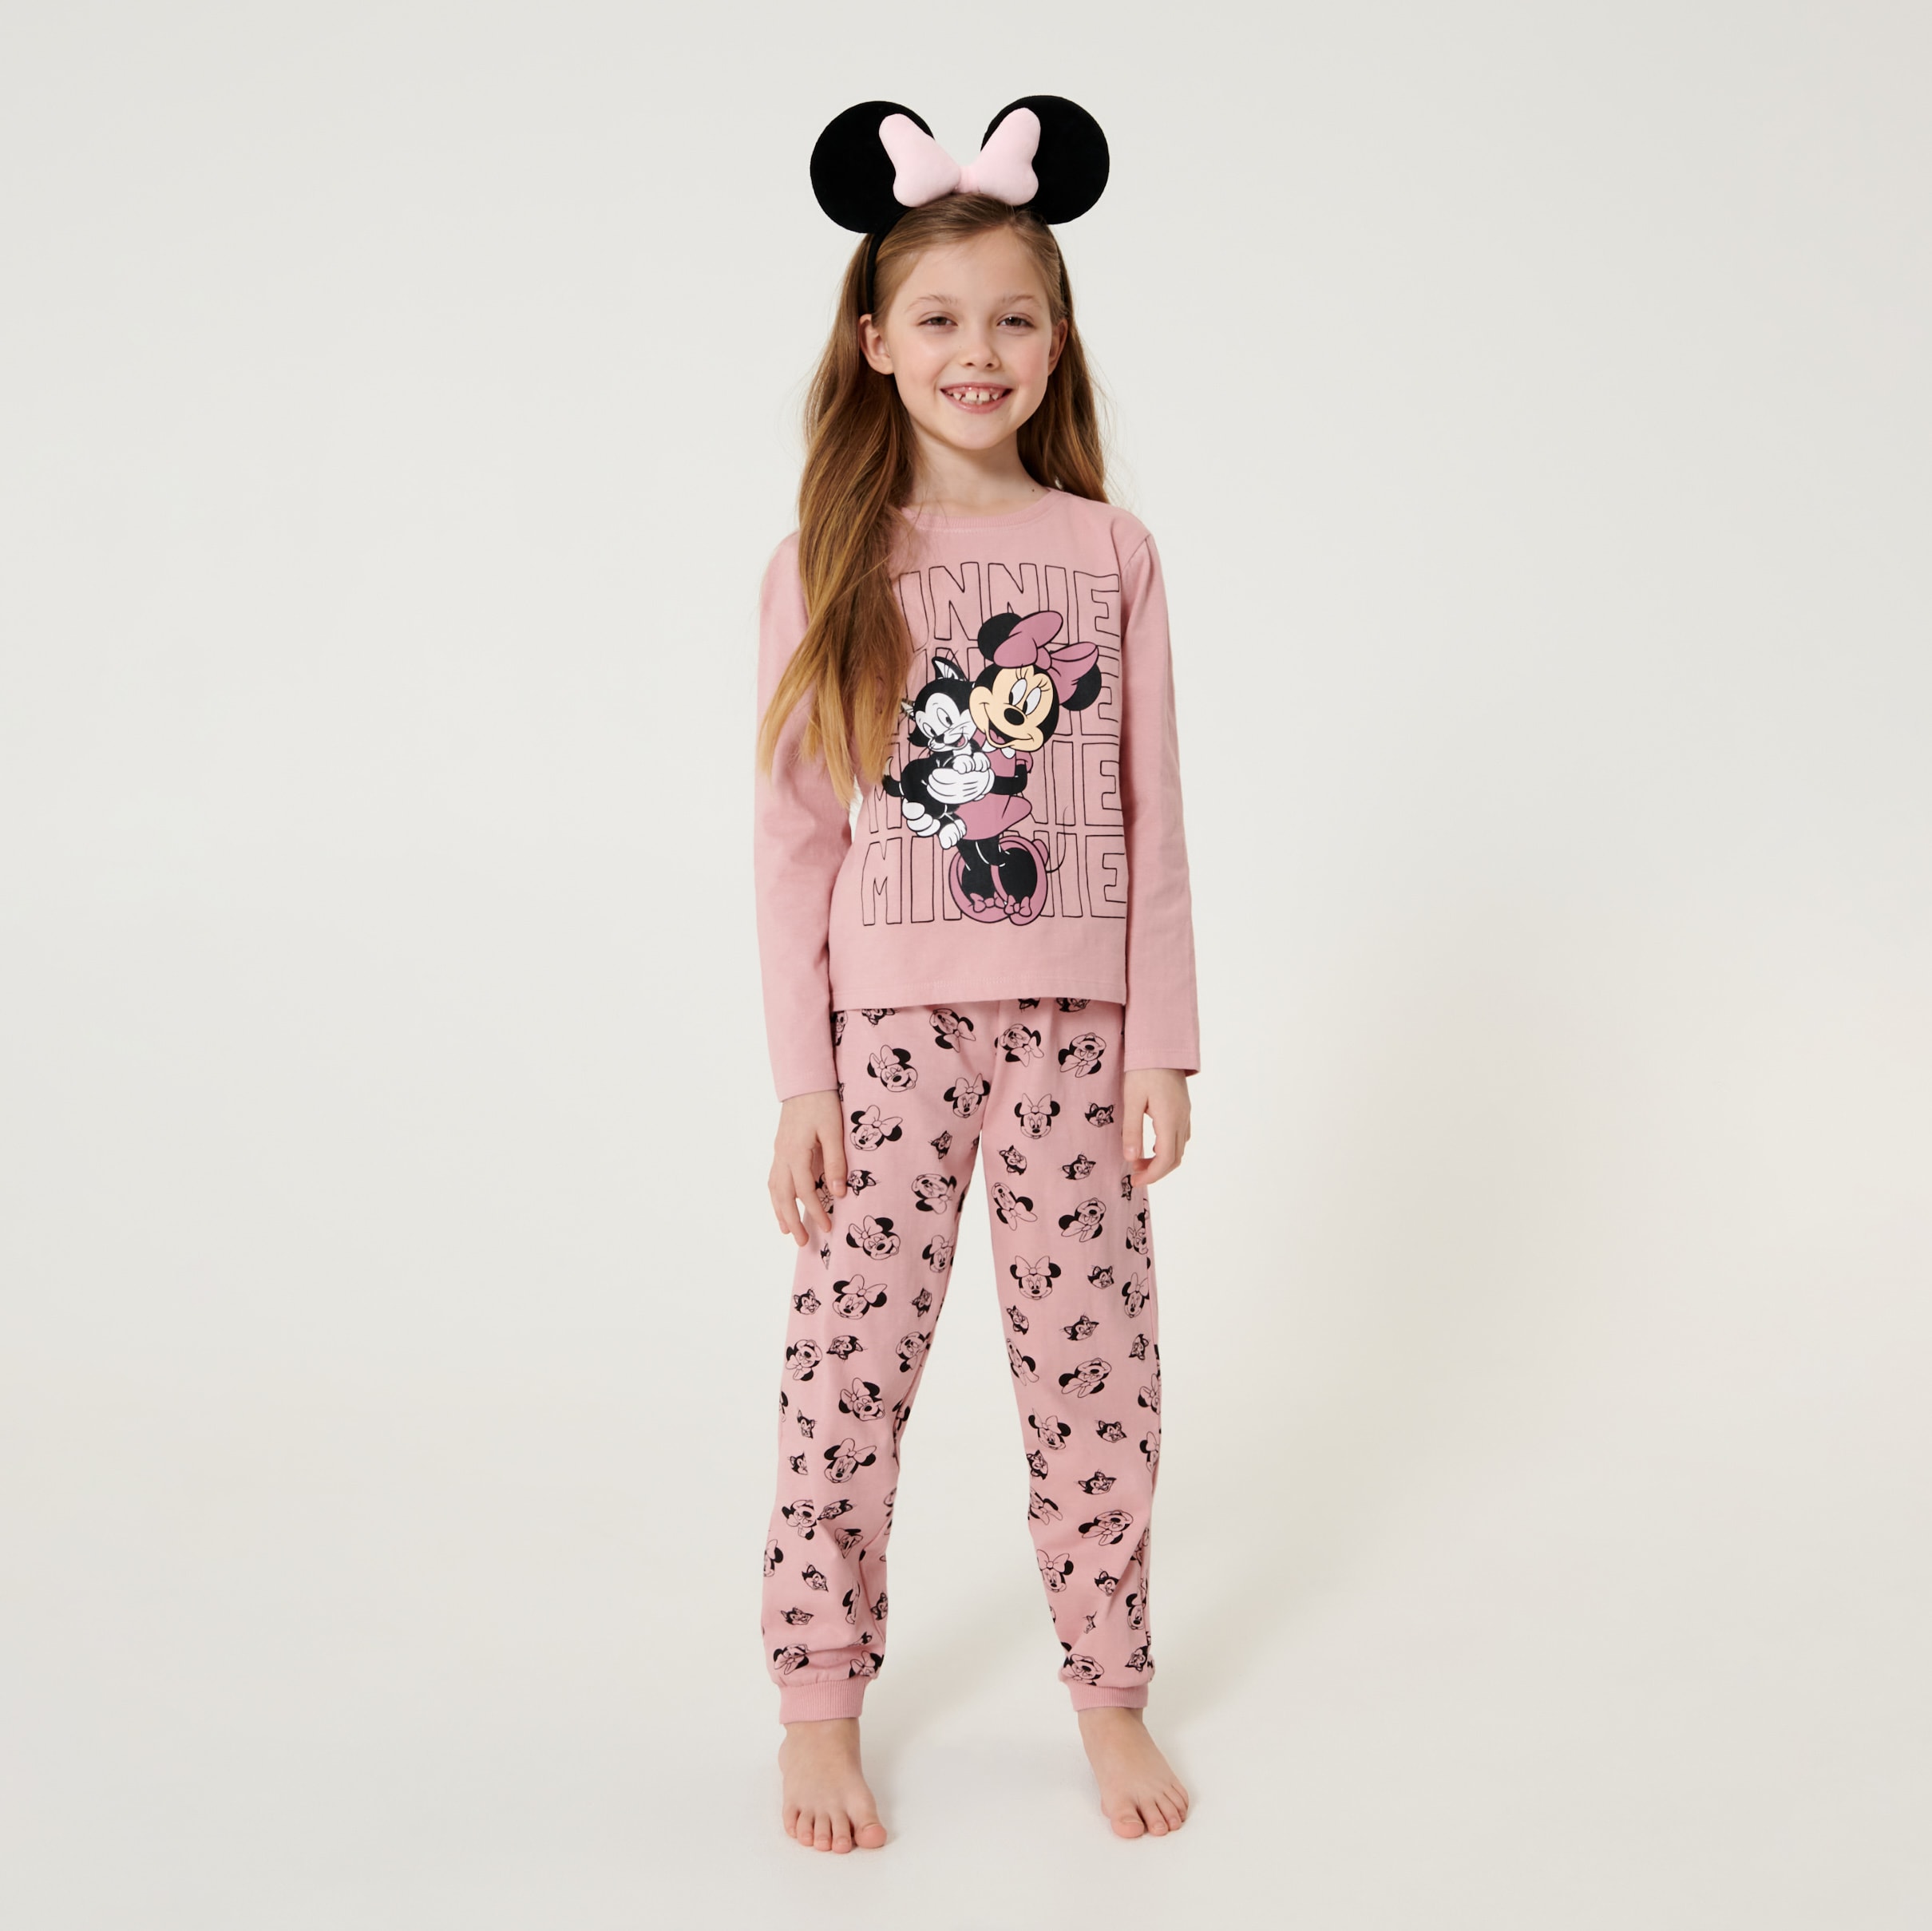 Sinsay – Pijama Minnie Mouse – Roz Sinsay Sinsay